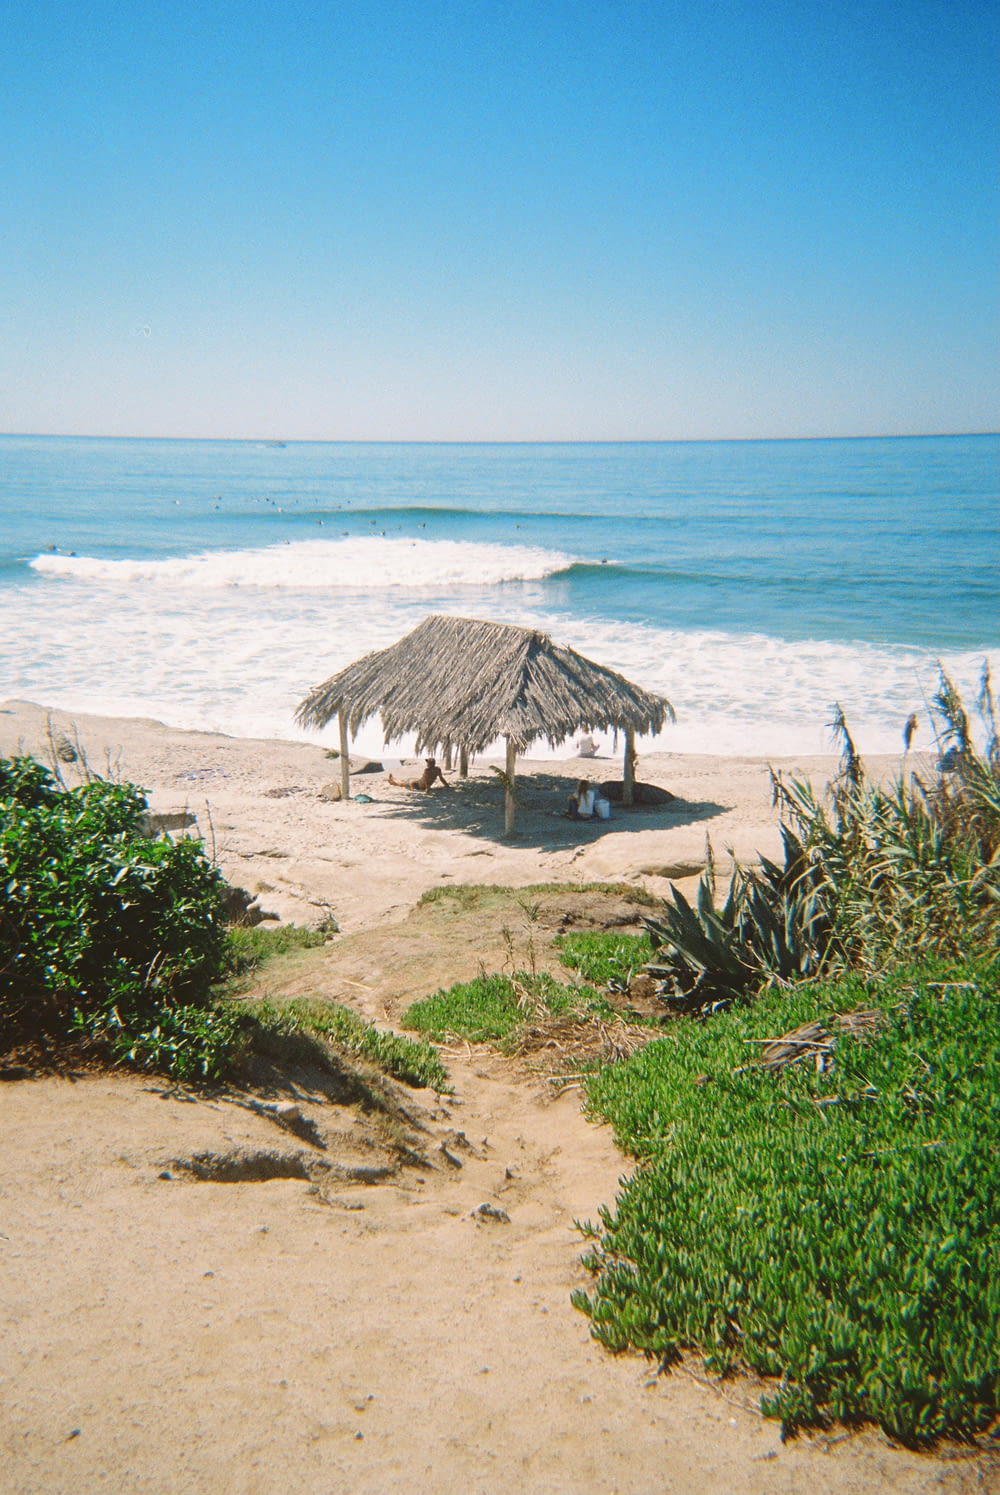 a beach with a hut